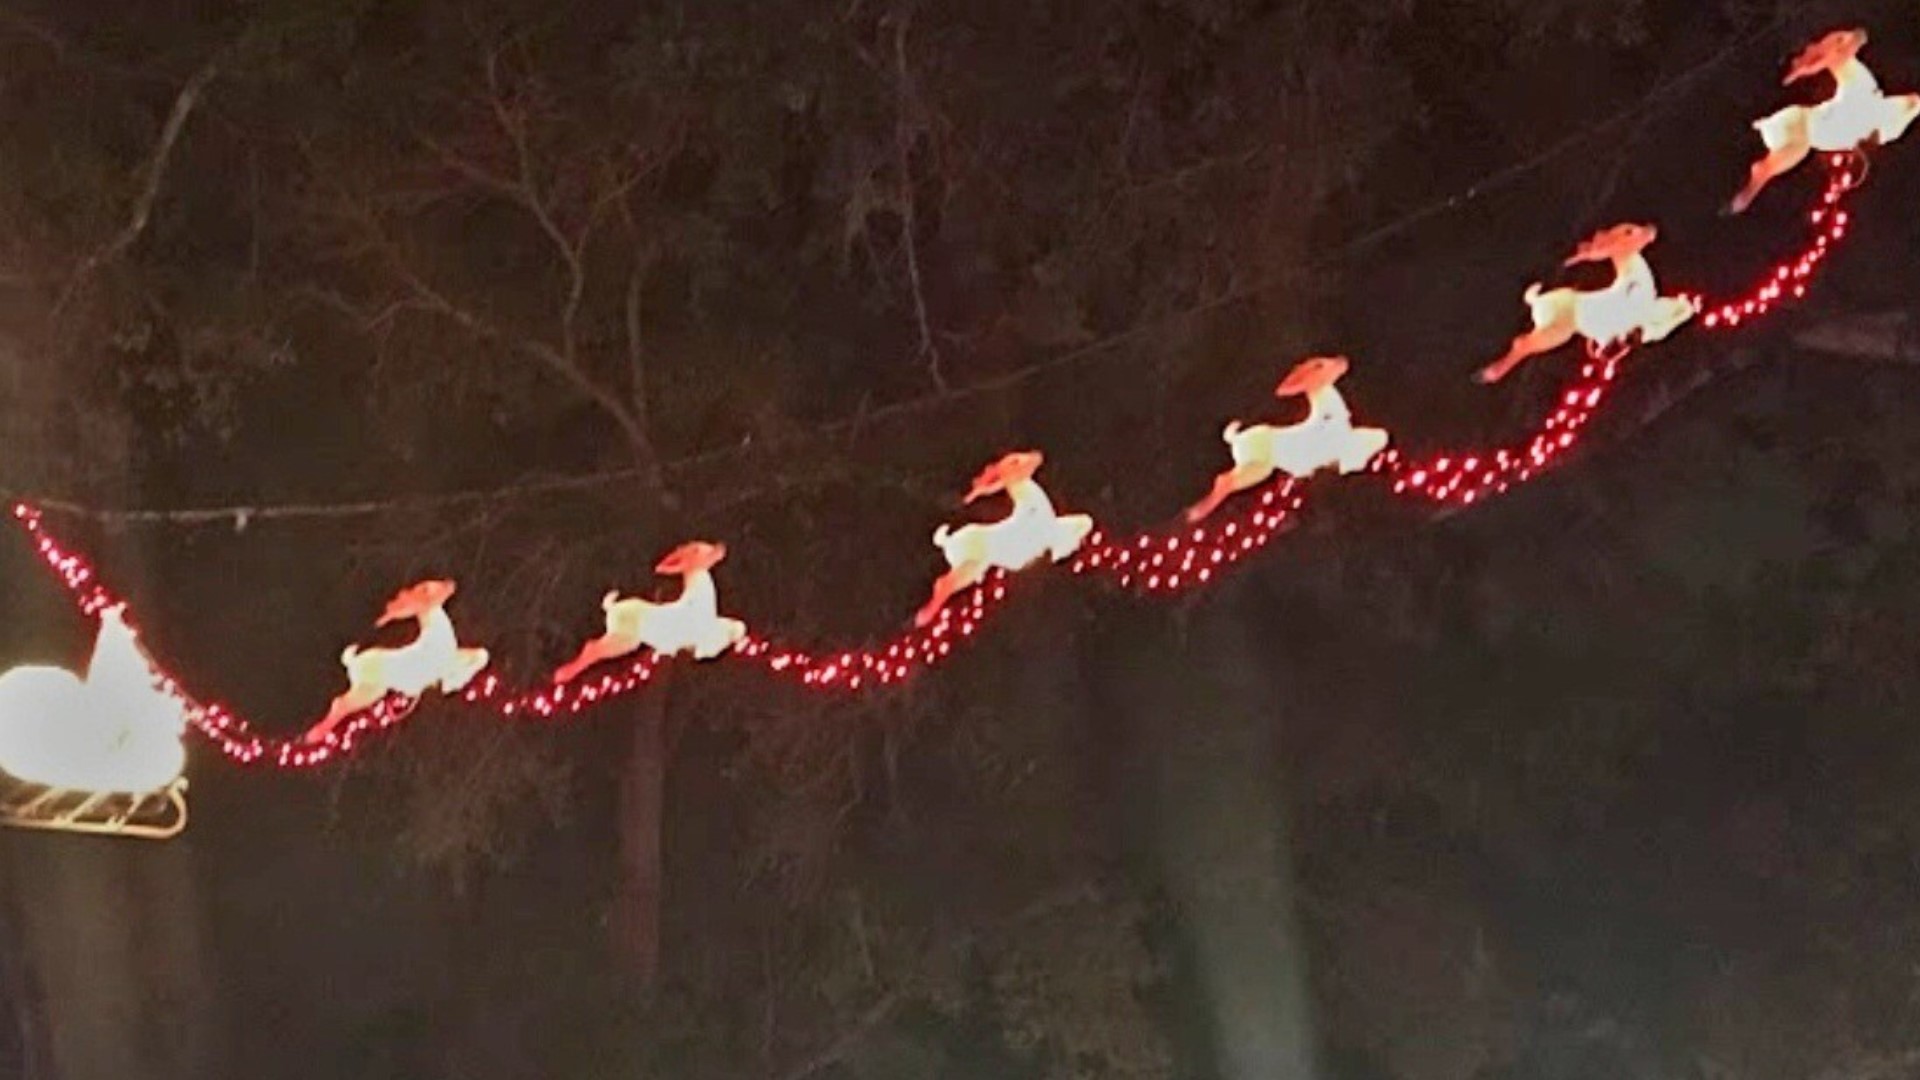 Blackhawk Bluff/Girvin Road holiday lights display in Jacksonville